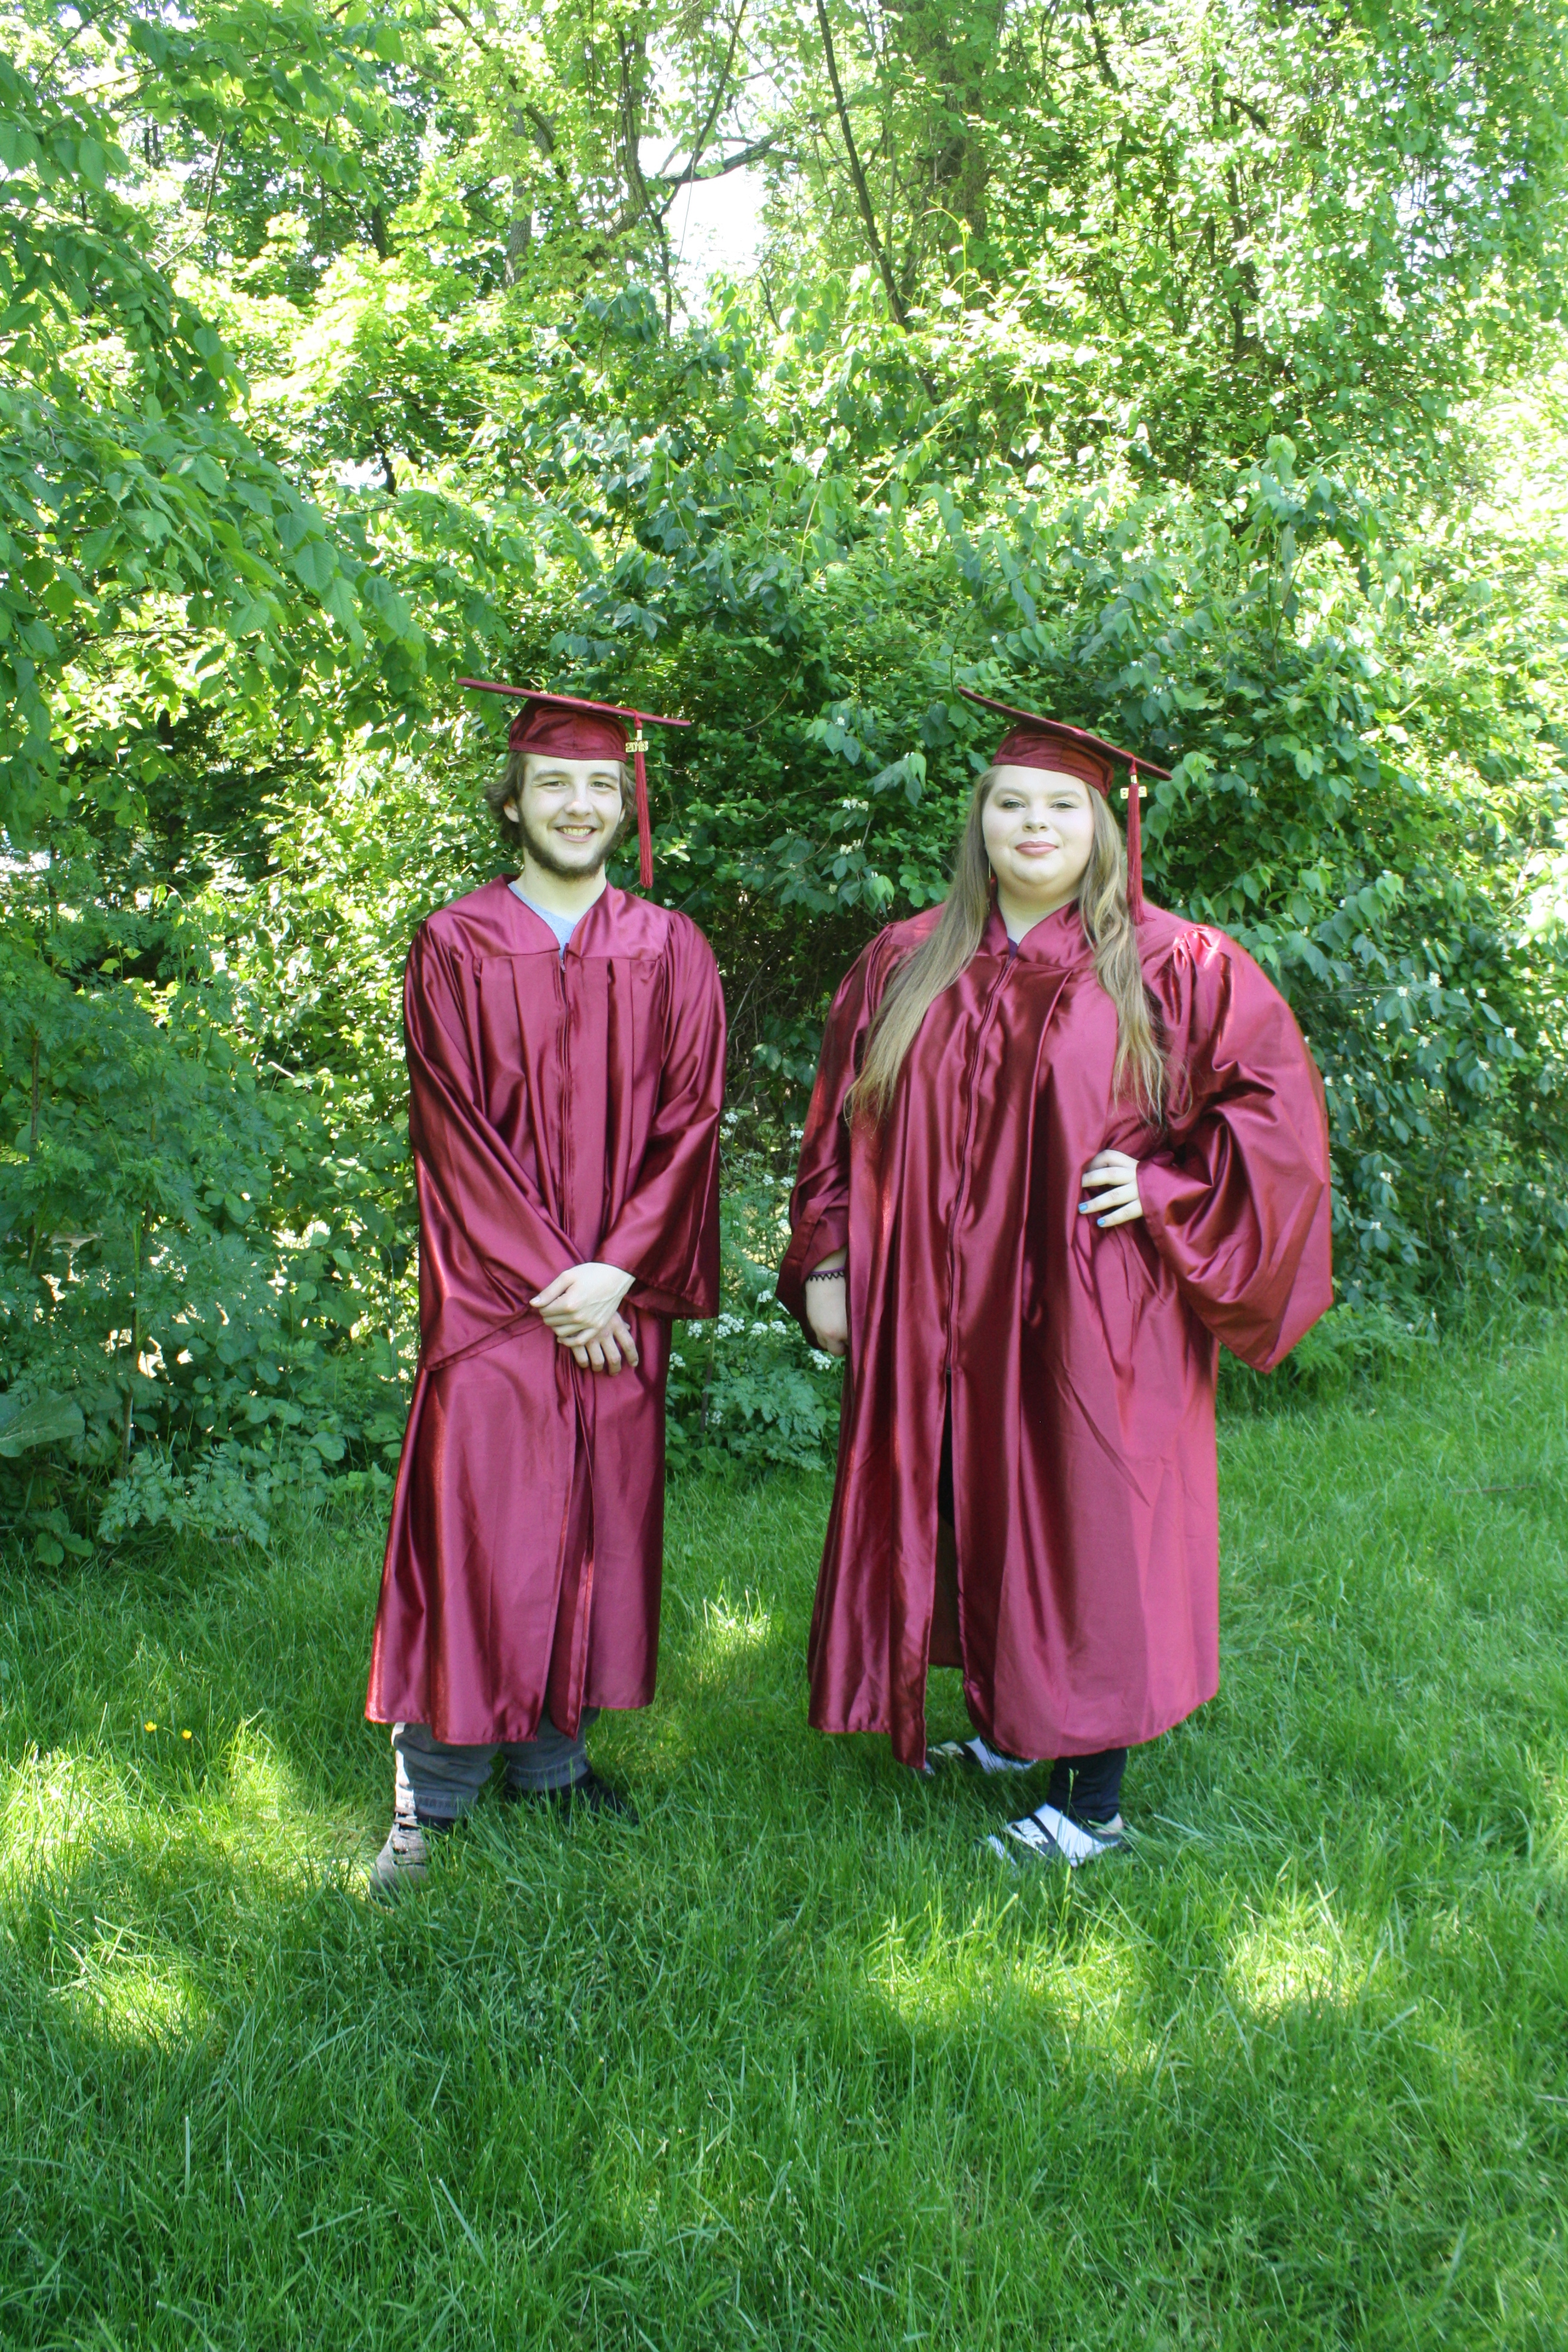 Bethlehem Buxmont graduates